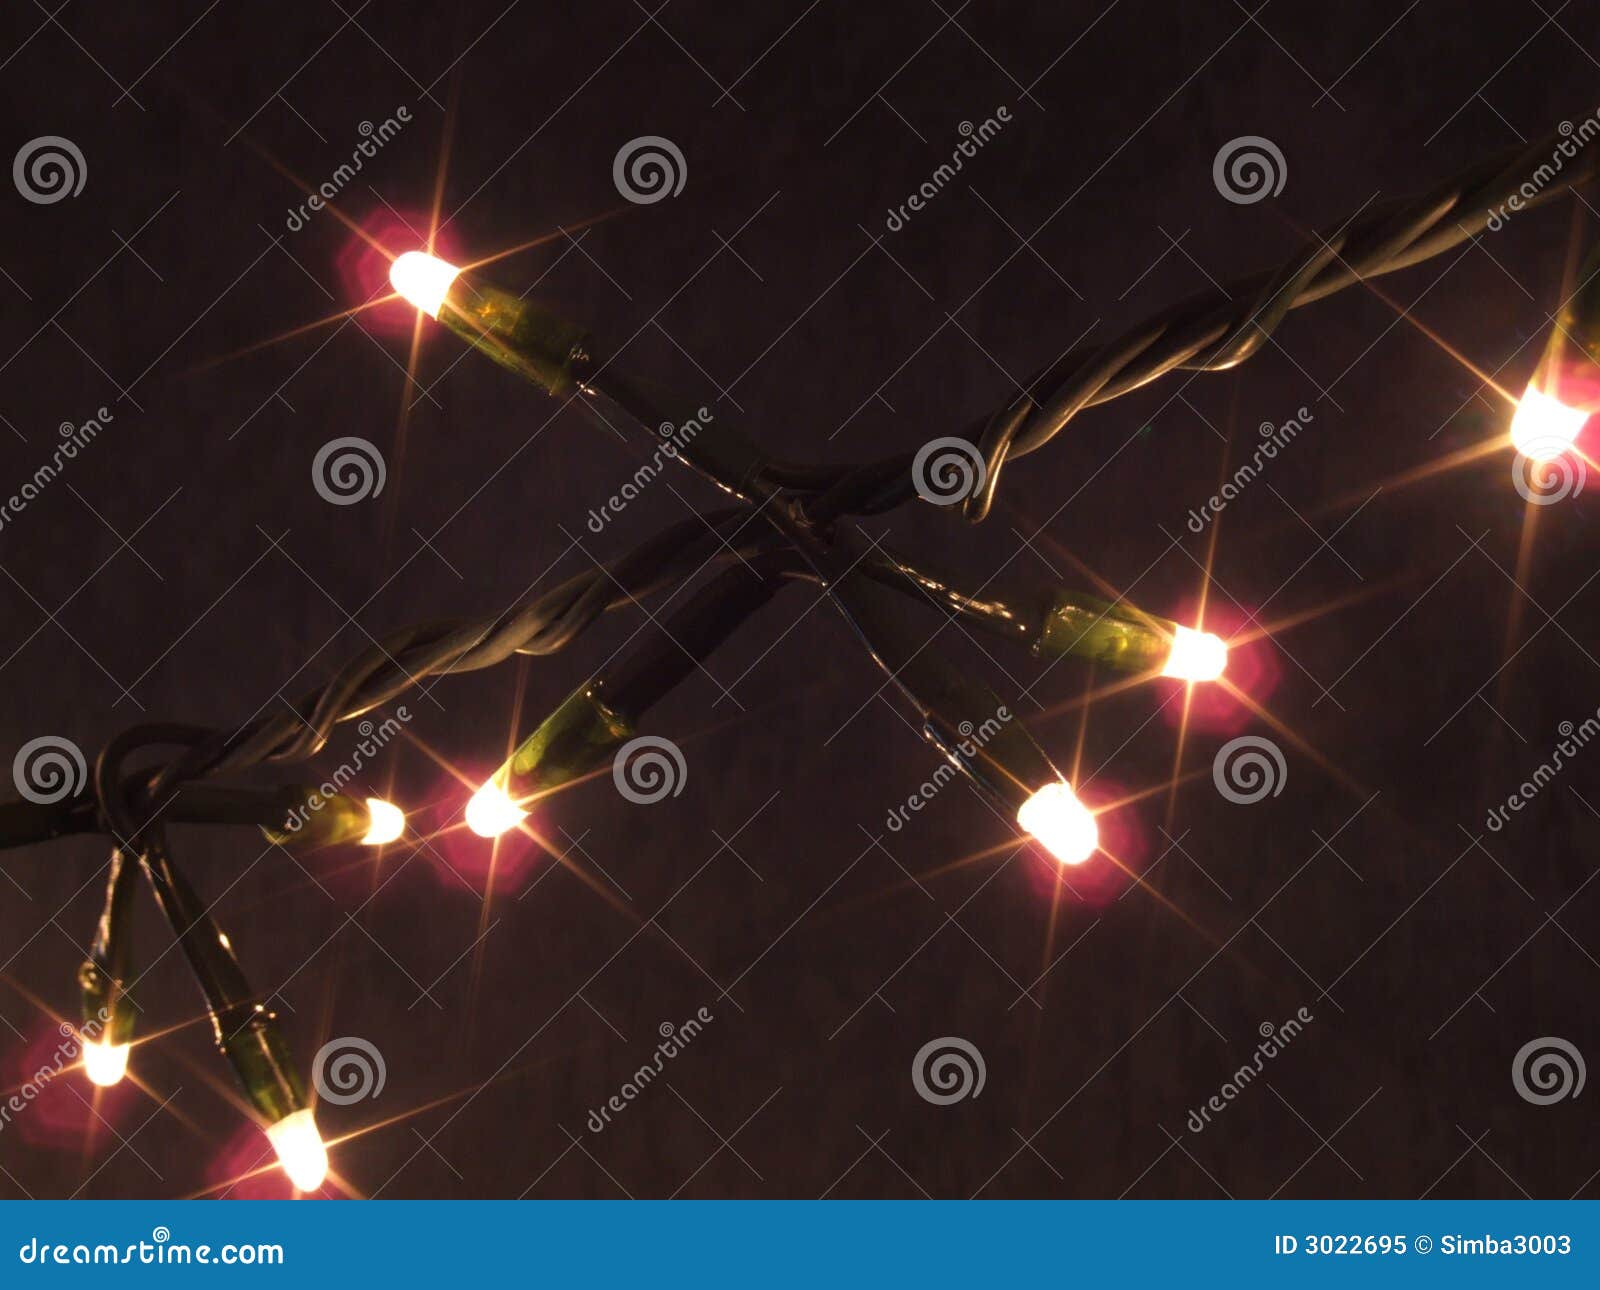 strand of lit Christmas lights against a dark background. Lights ...